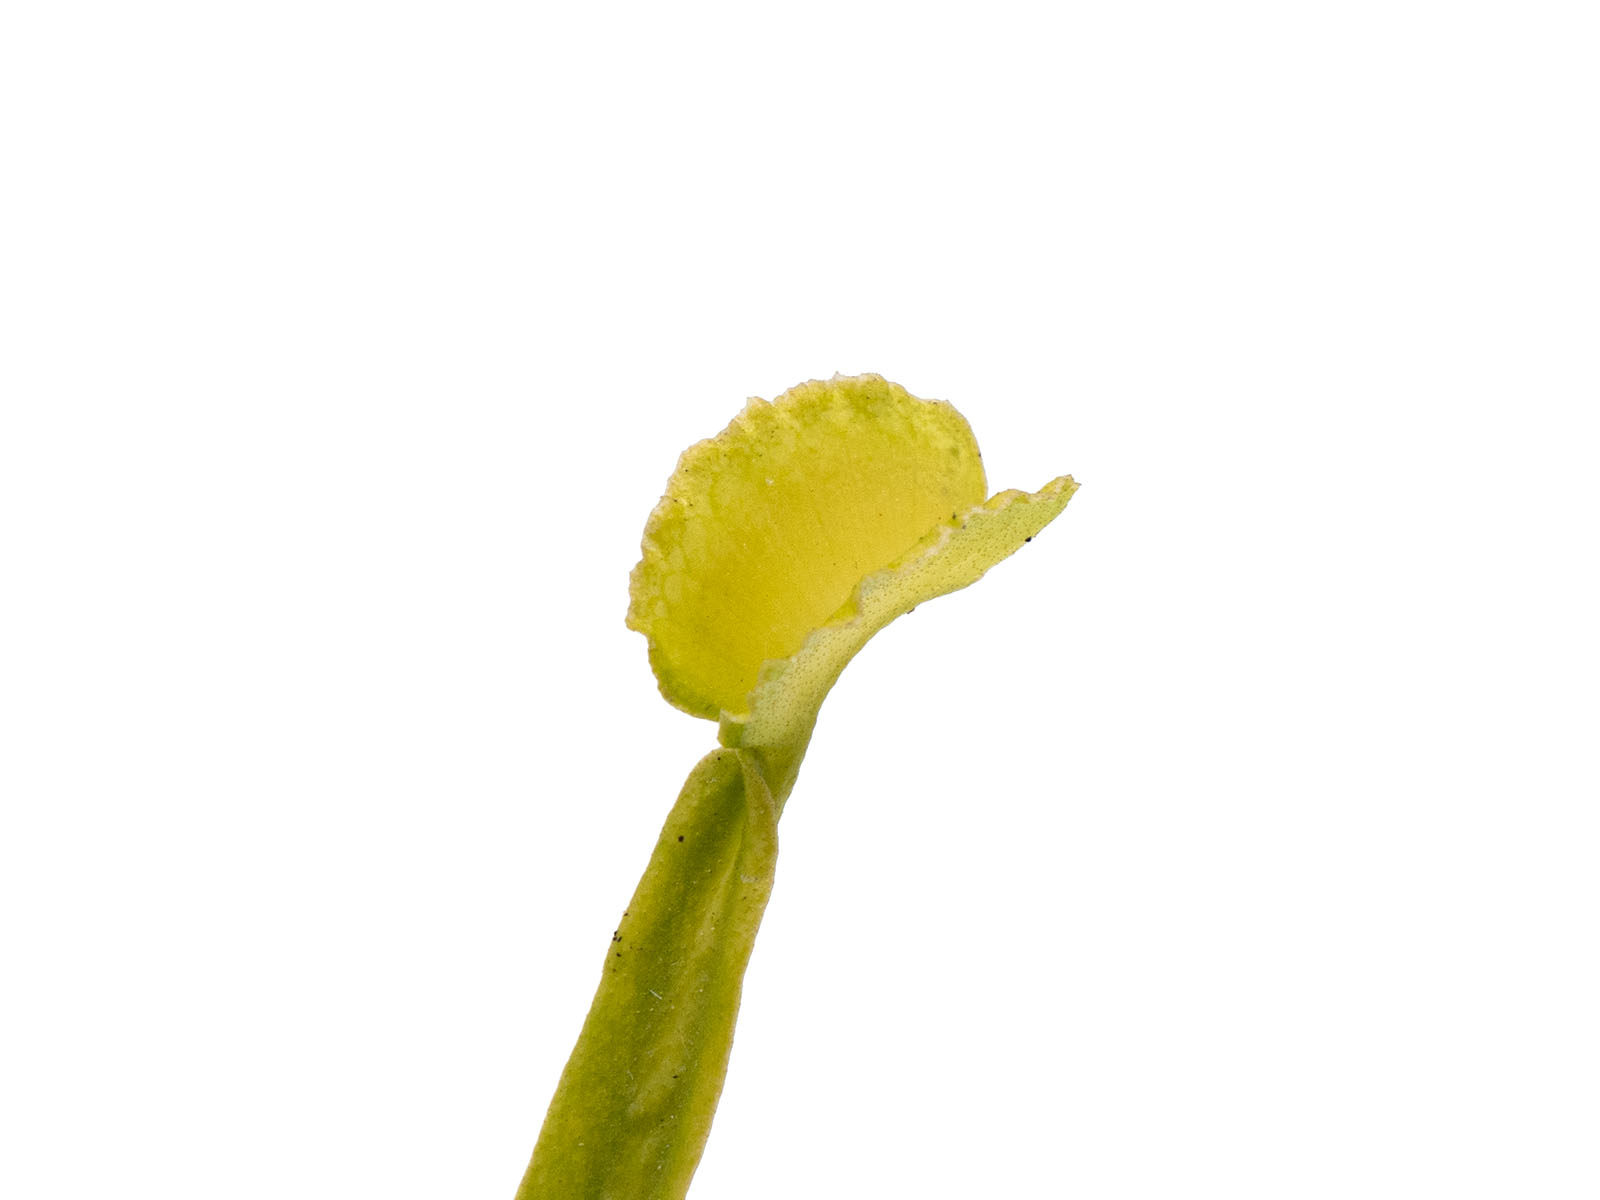 Dionaea muscipula - GJ Homunkulus